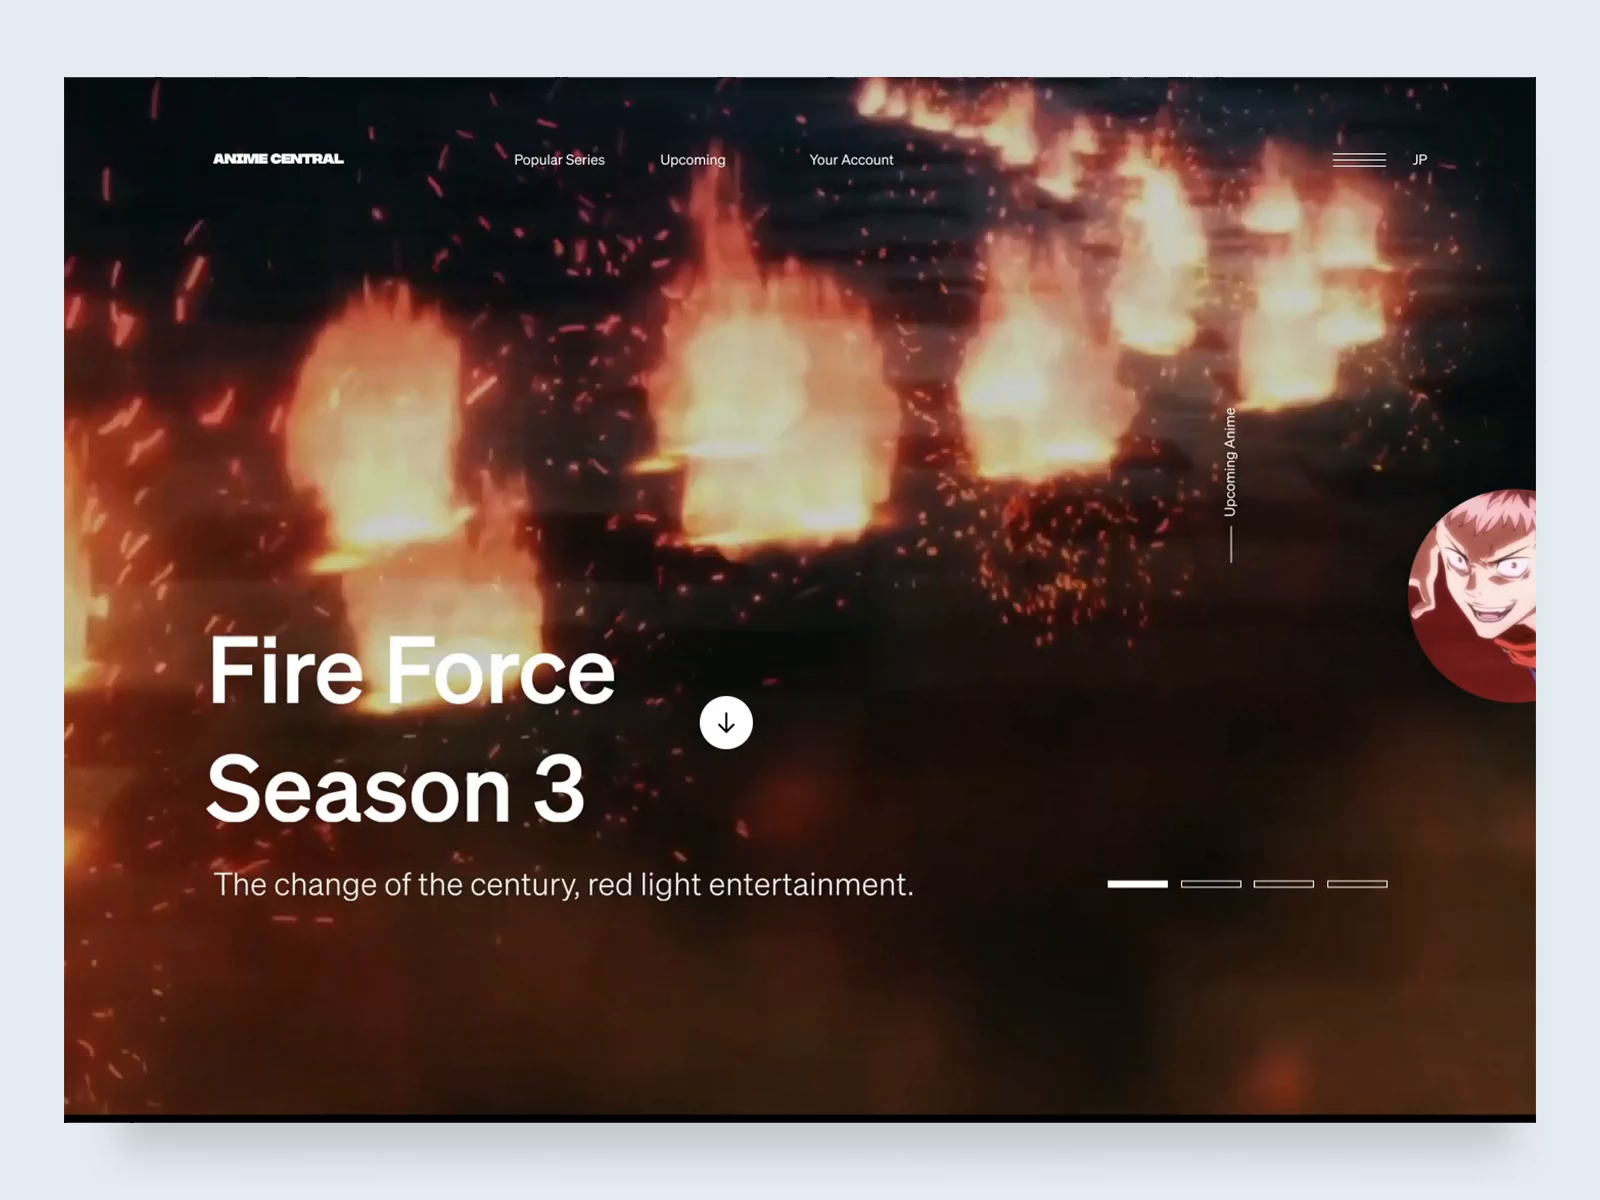 Anime Trending+ - Fire Force Season 3 has been